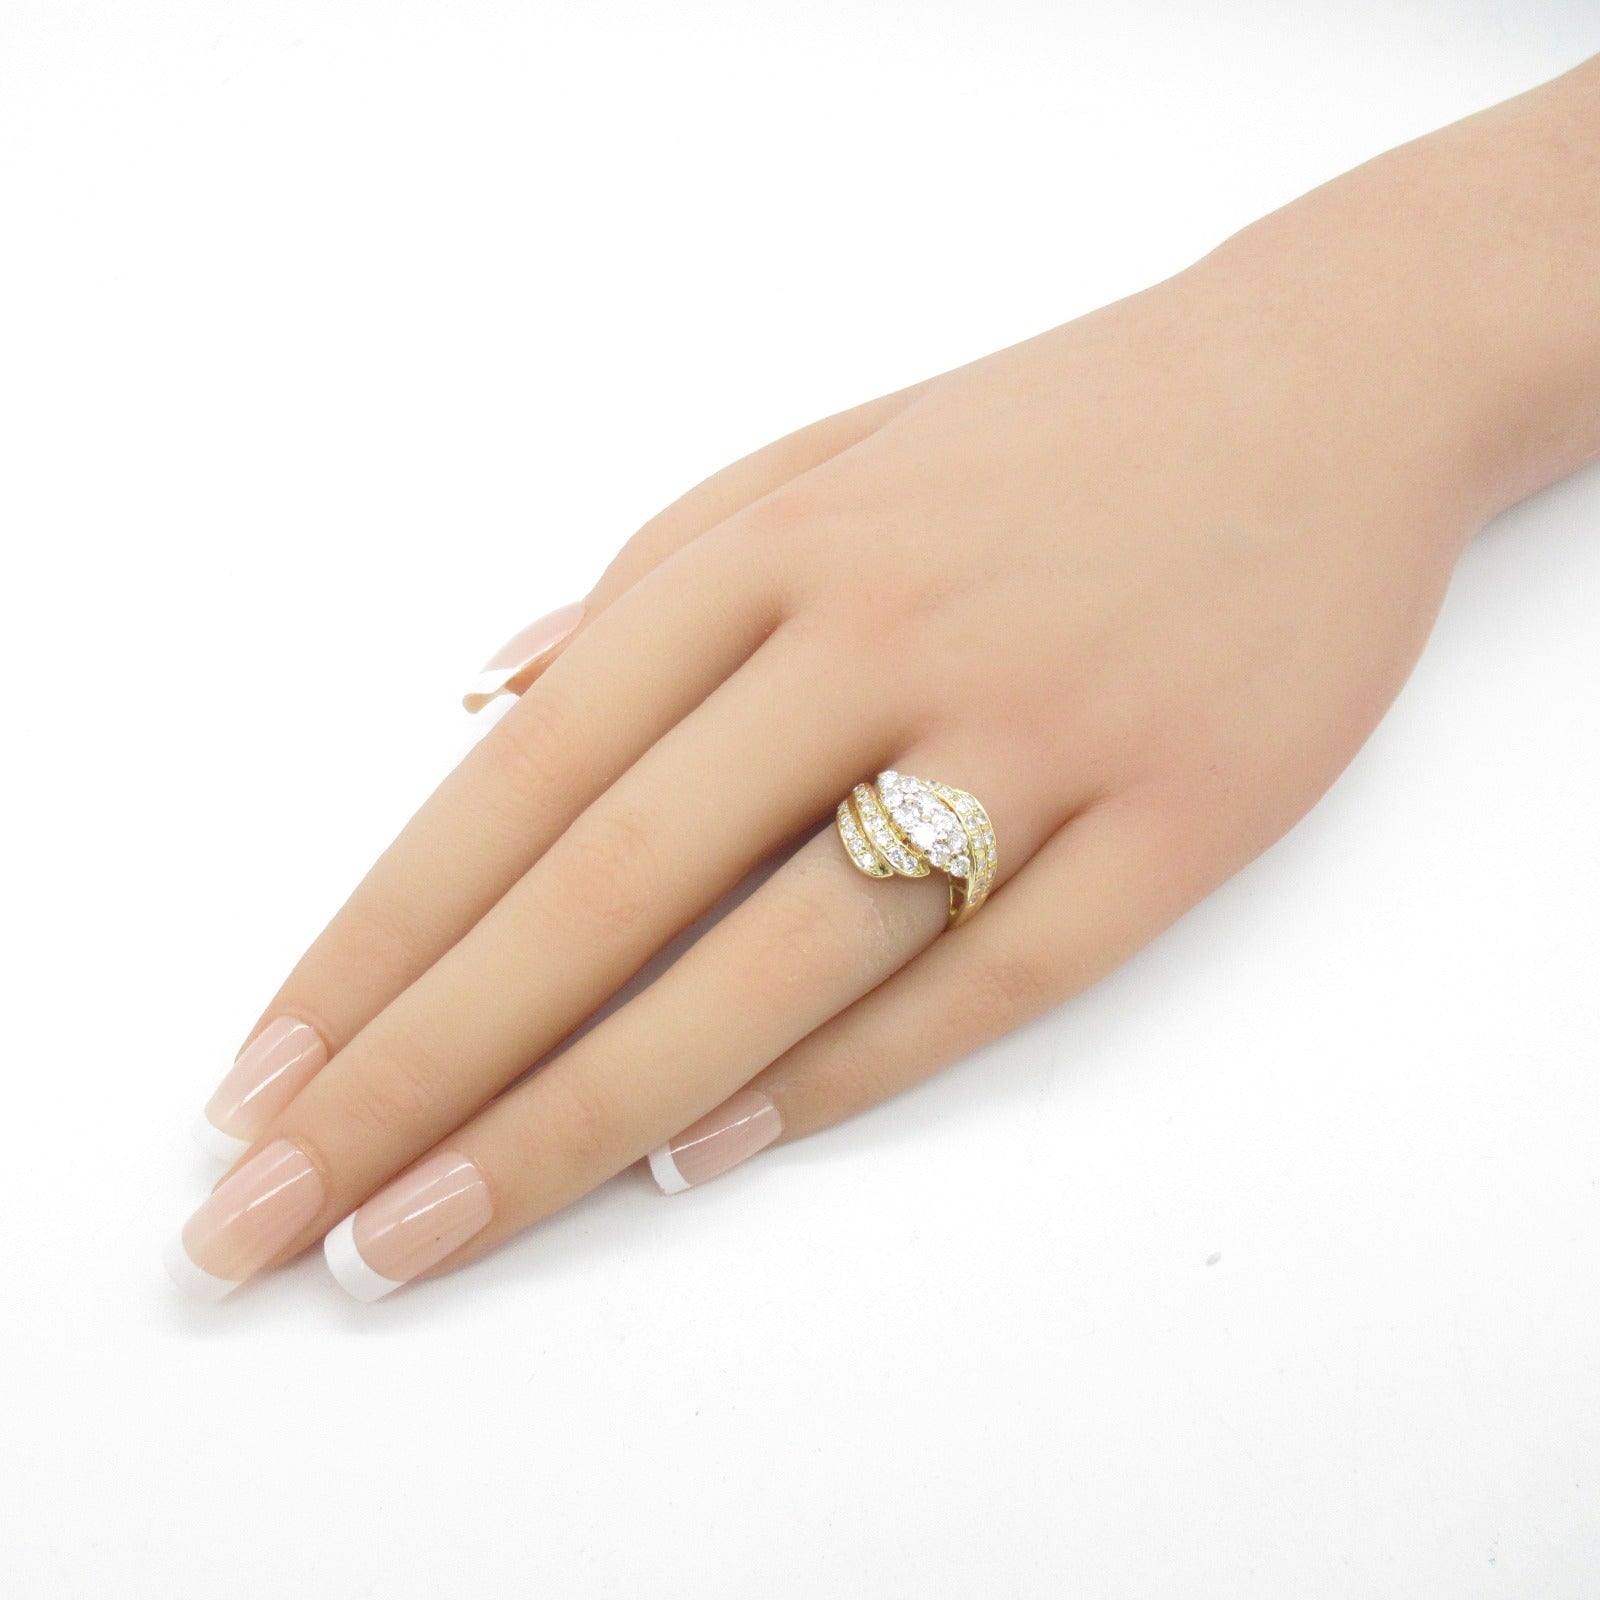 Jewelry Jewelry Diamond Ring Ring Ring Jewelry K18 (yellow g) Diamond  Clear Diamond 5.2g